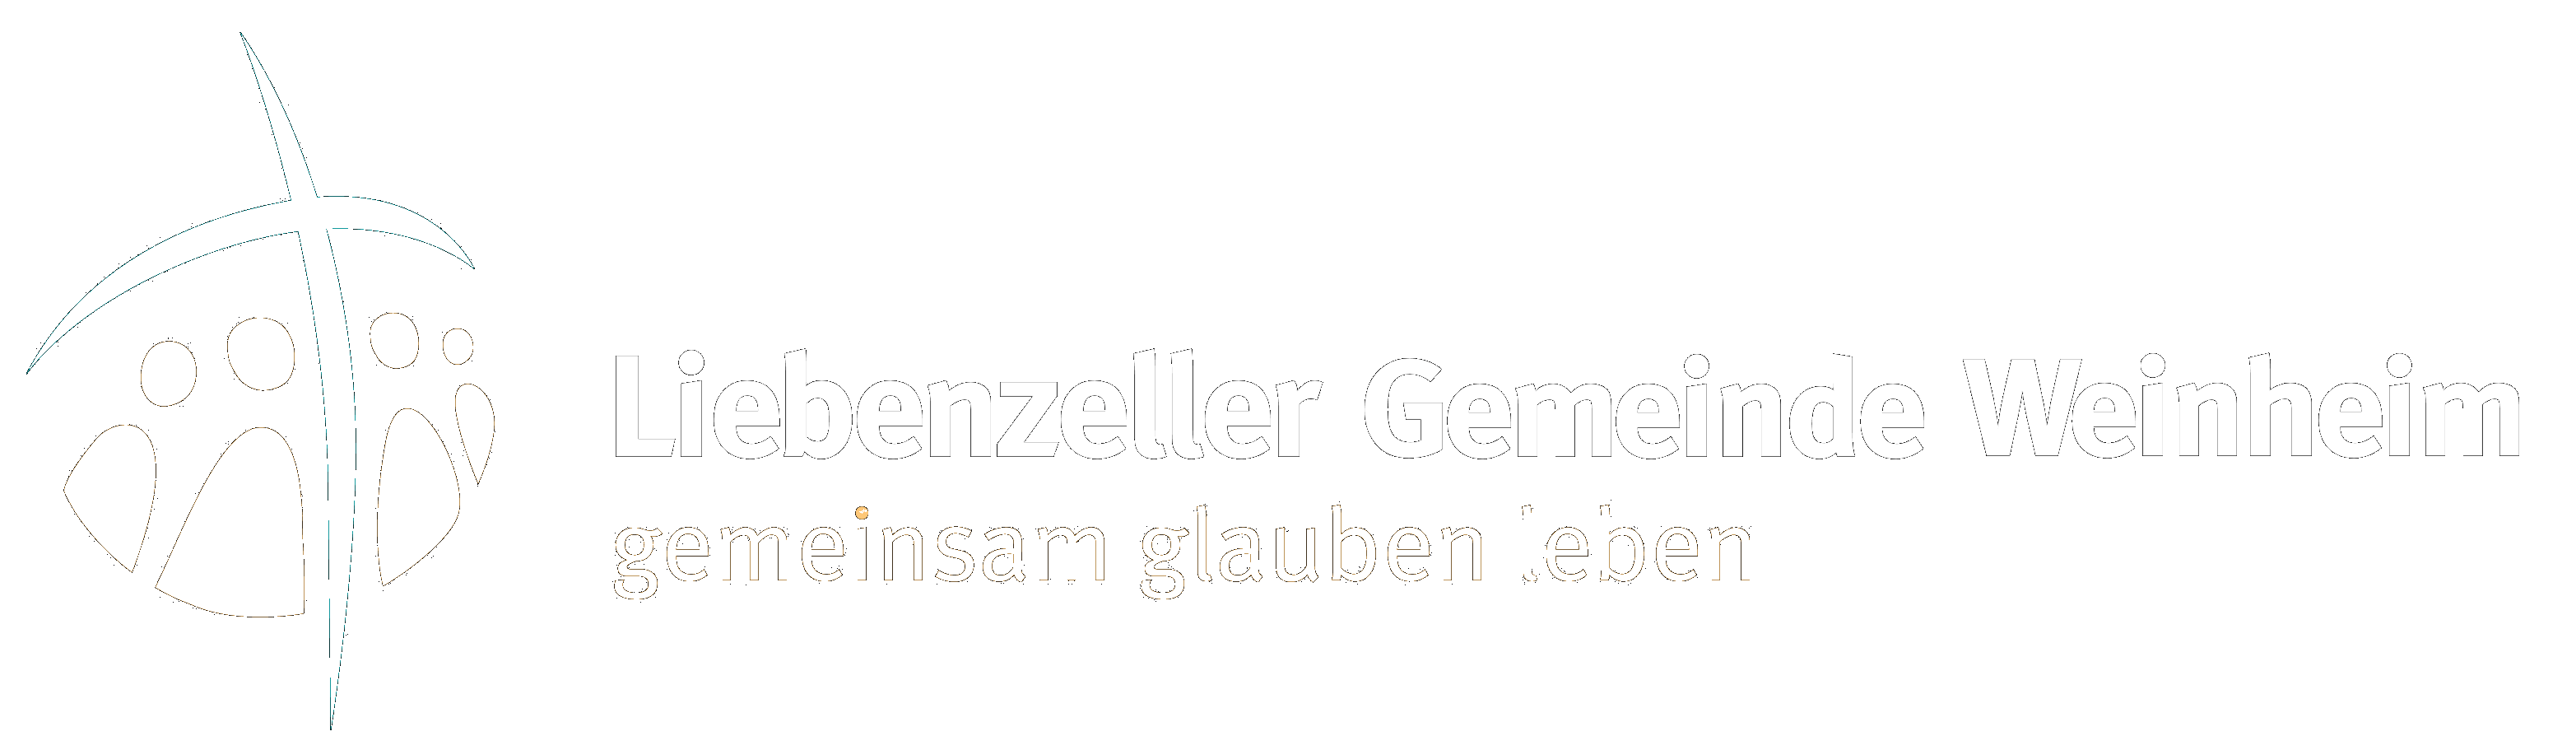 weinheim logo